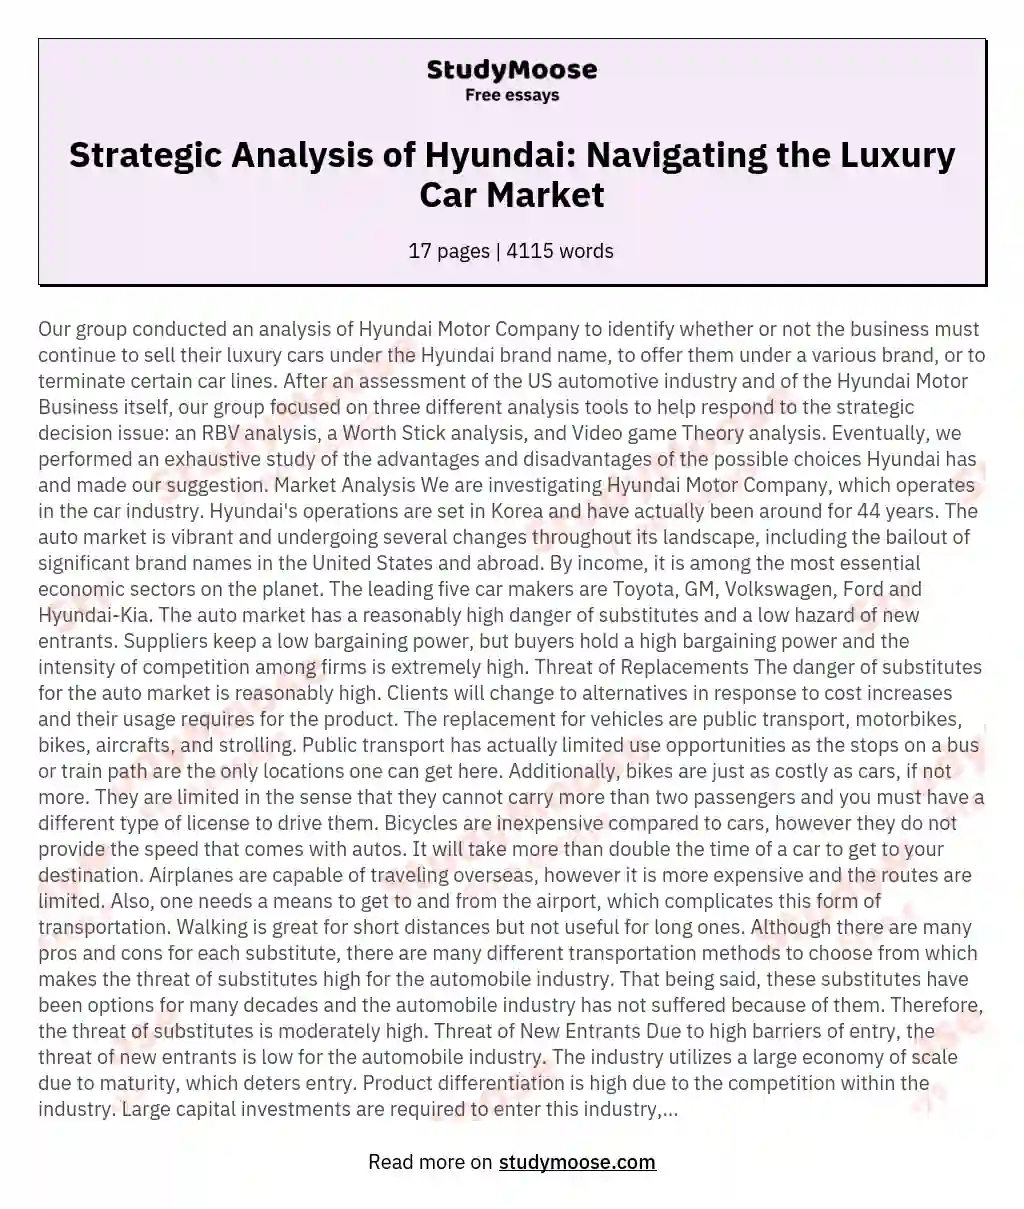 Strategic Analysis of Hyundai: Navigating the Luxury Car Market essay